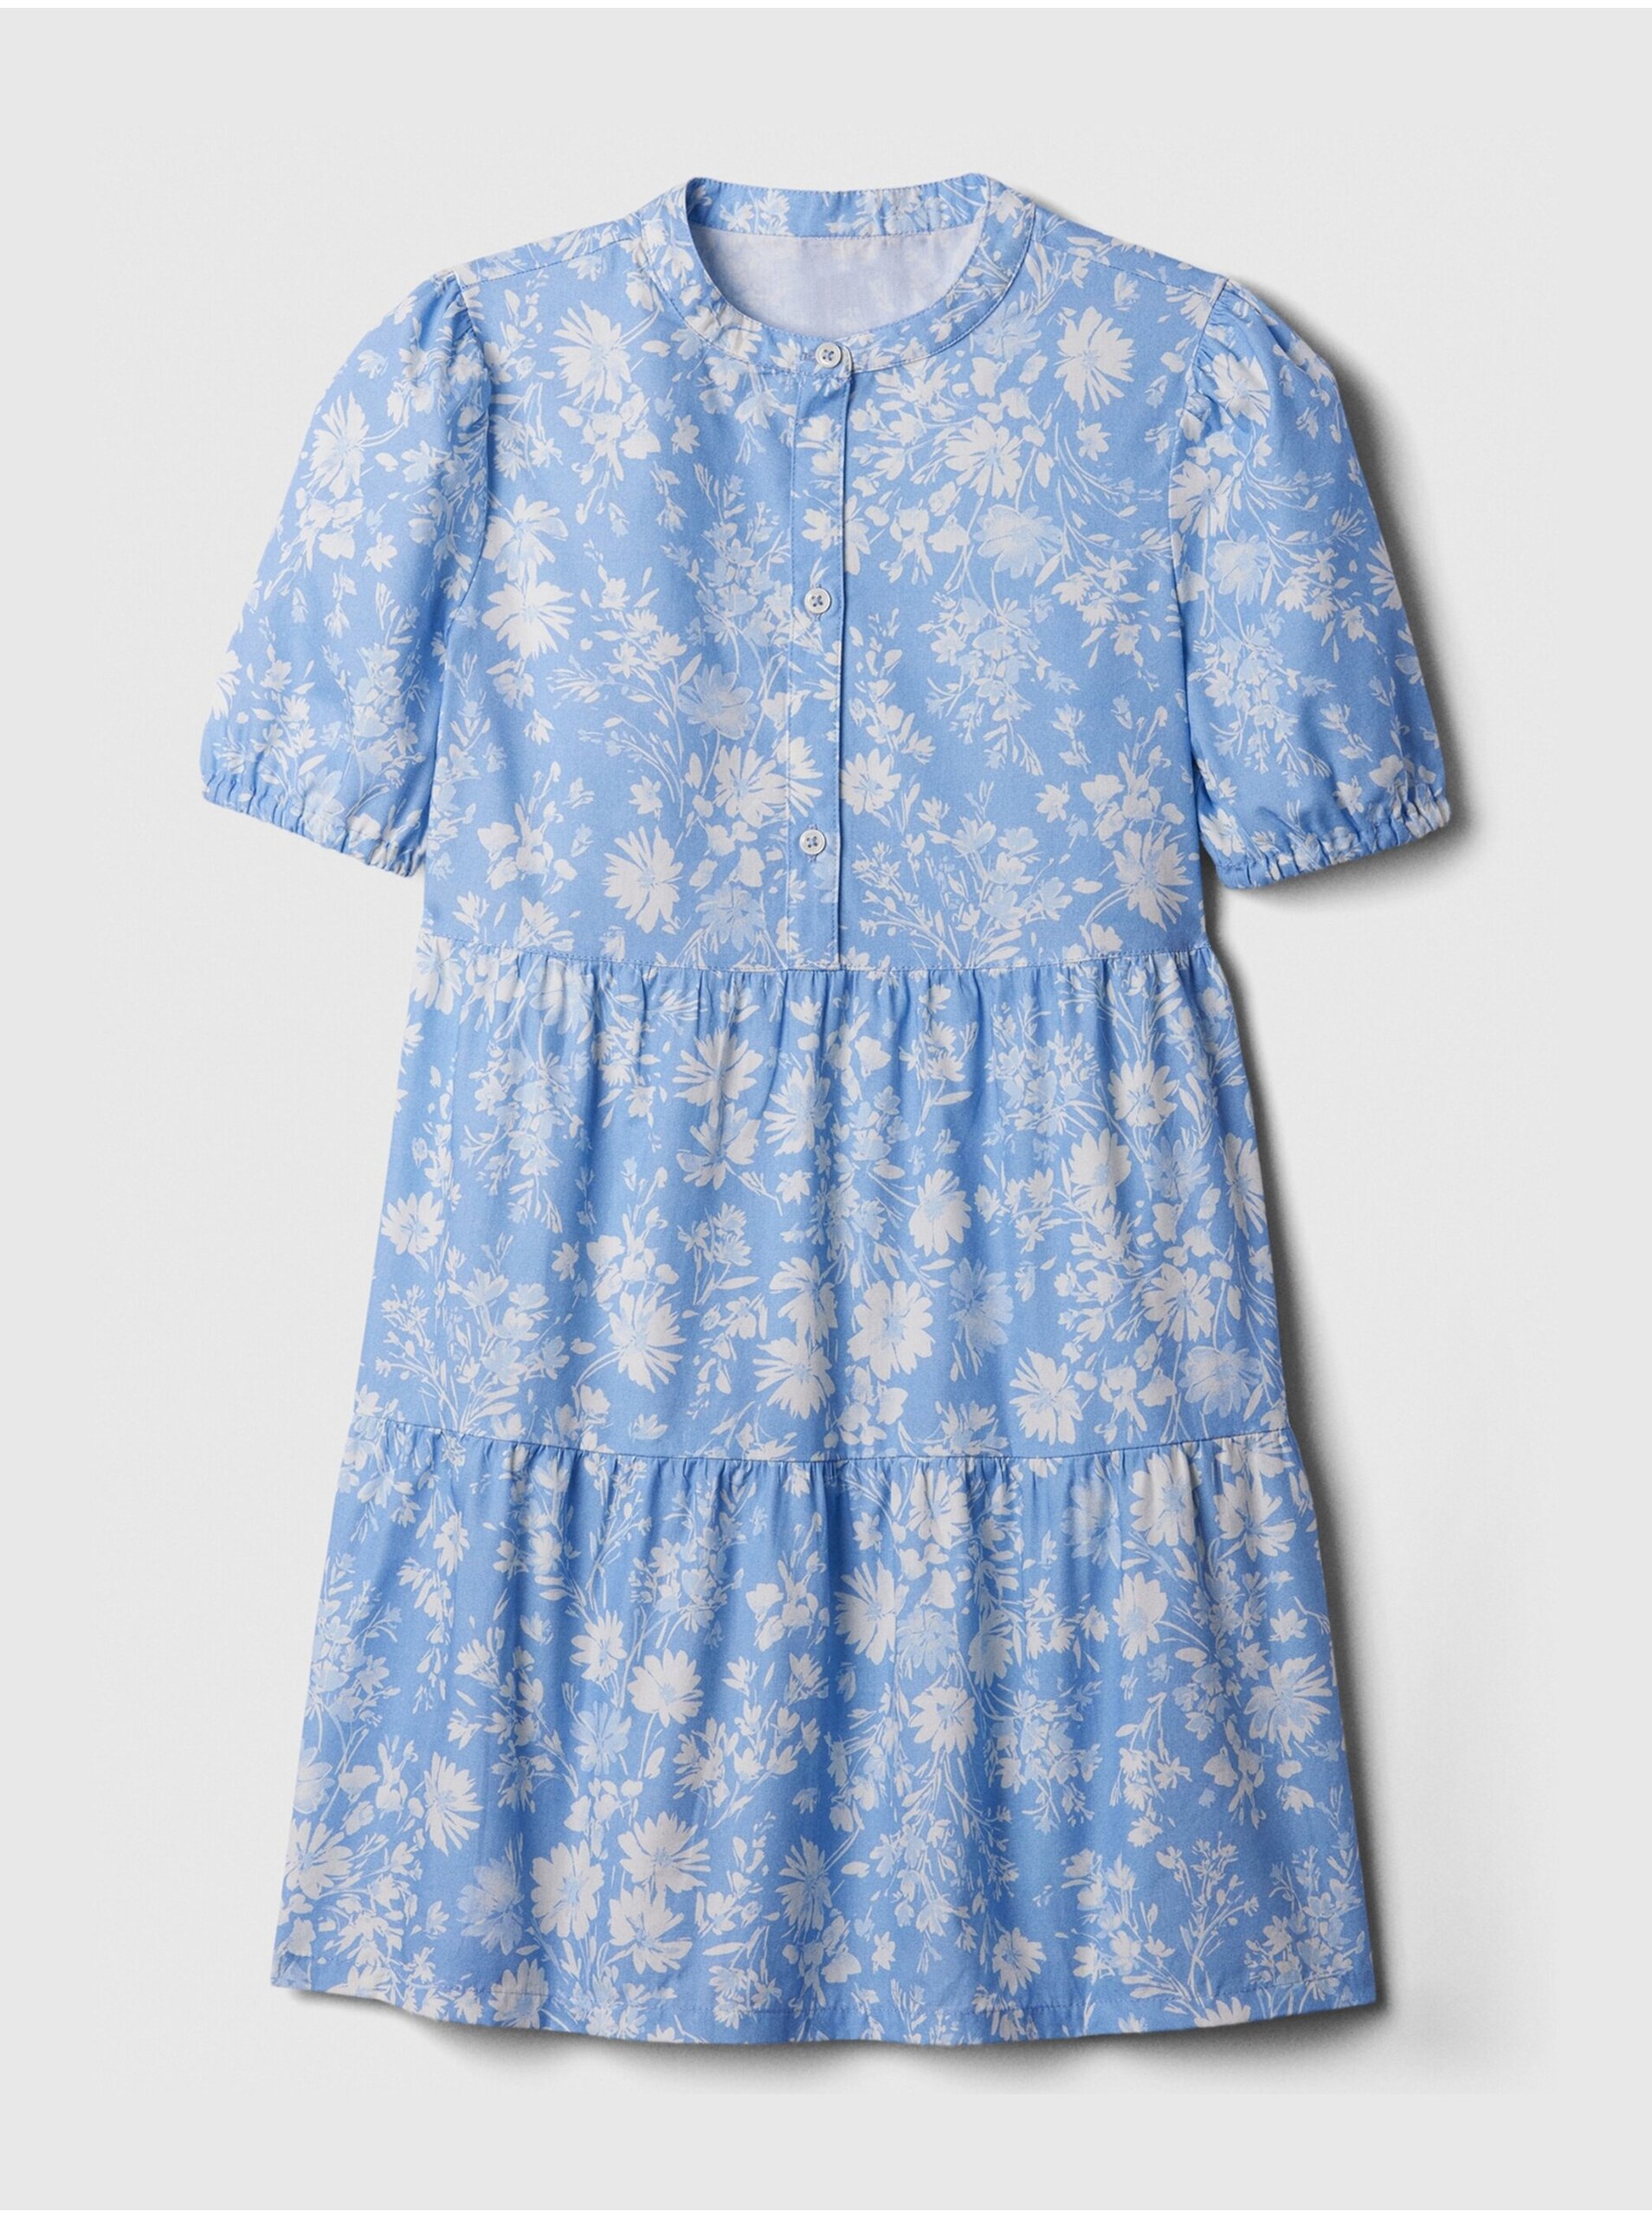 Lacno Modré dievčenské kvetované šaty GAP